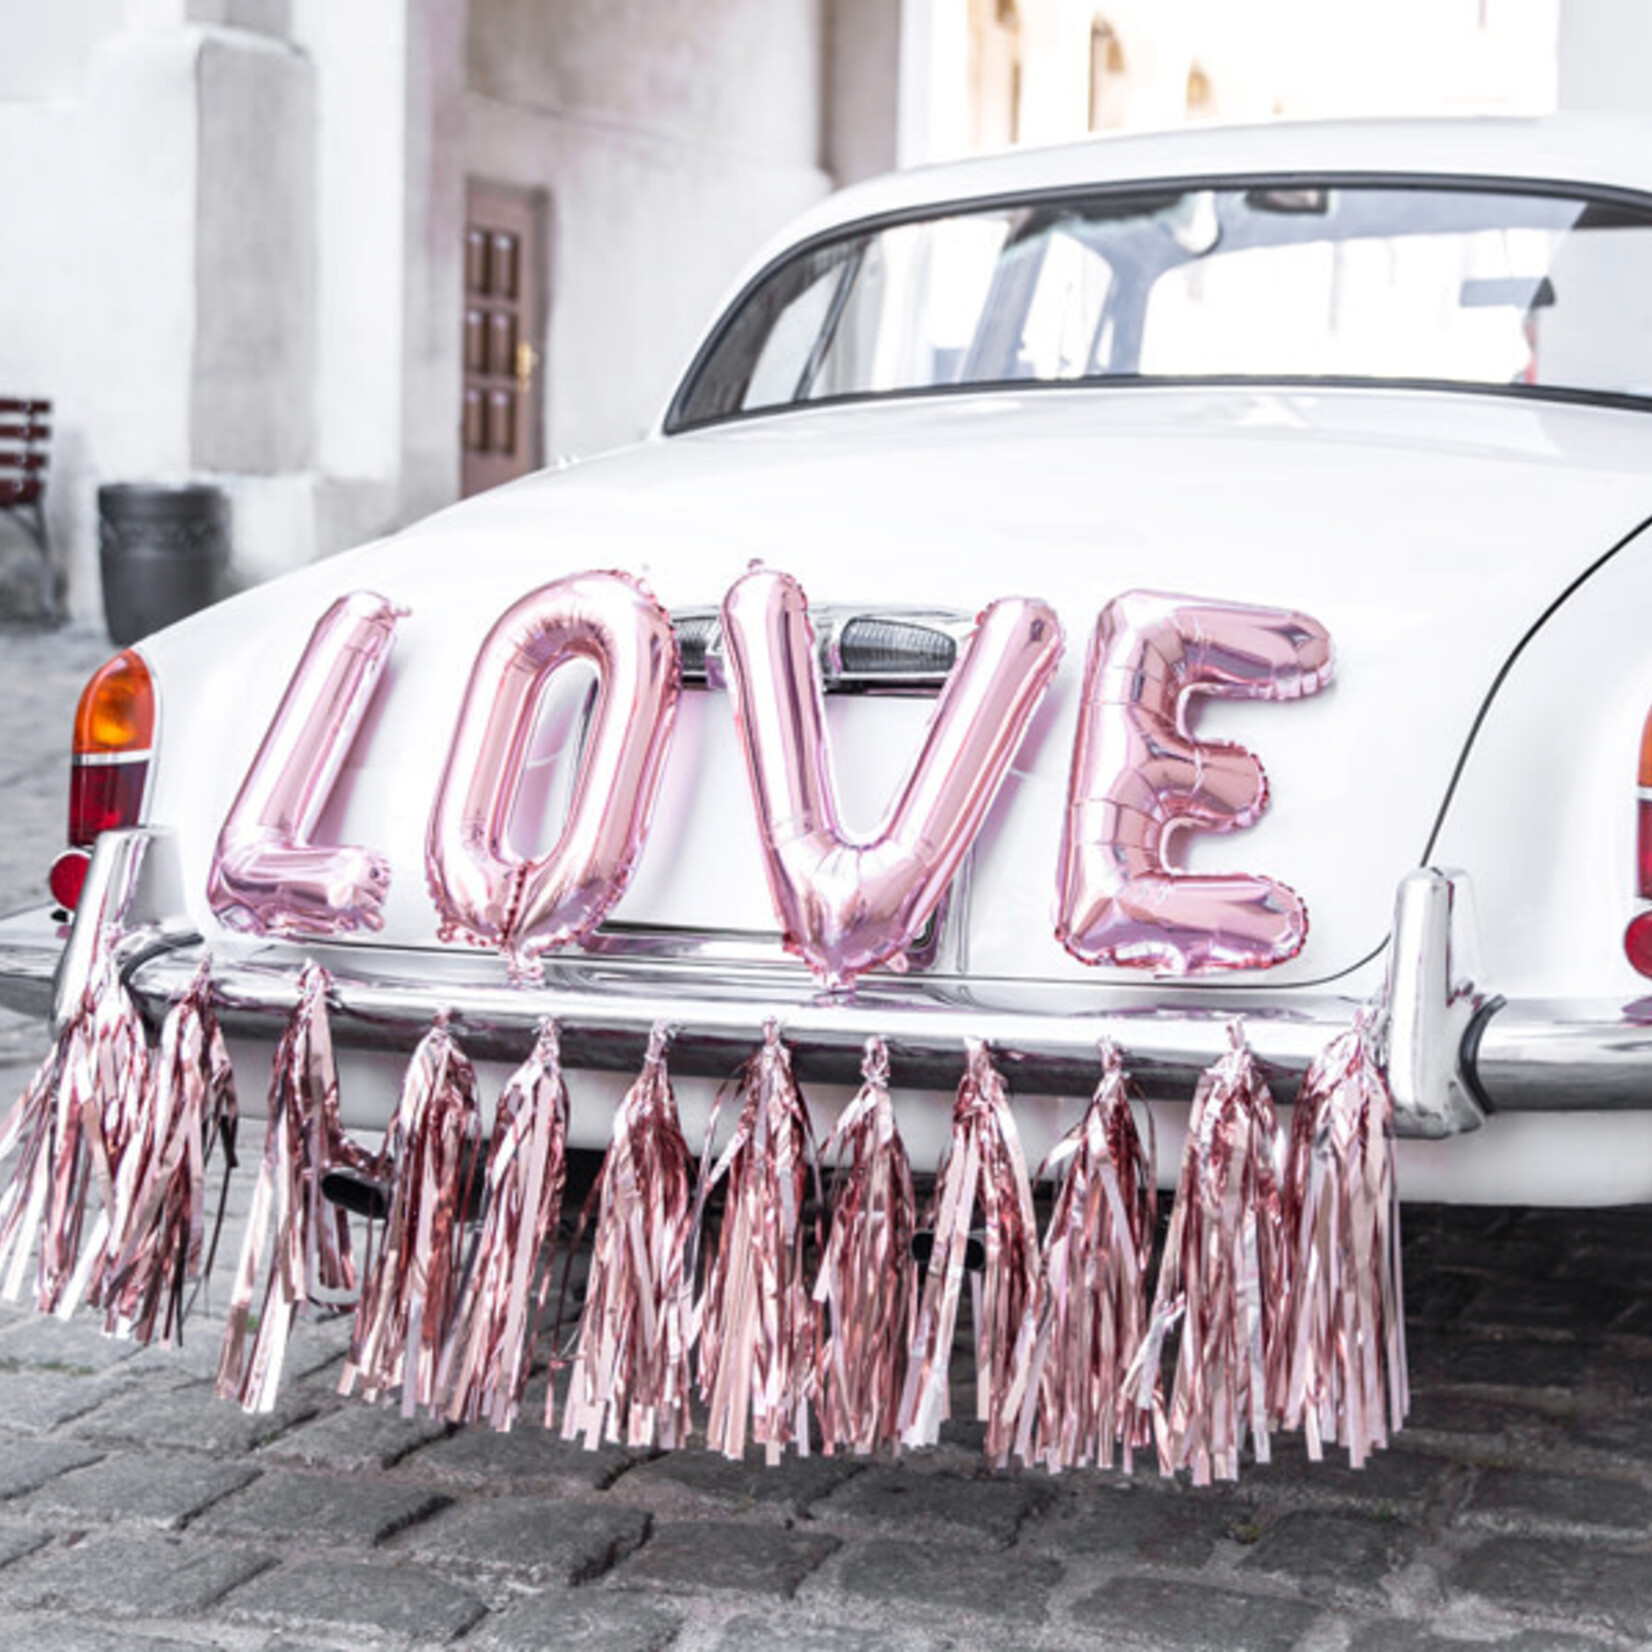 PD Car decoration kit - Love, rose gold